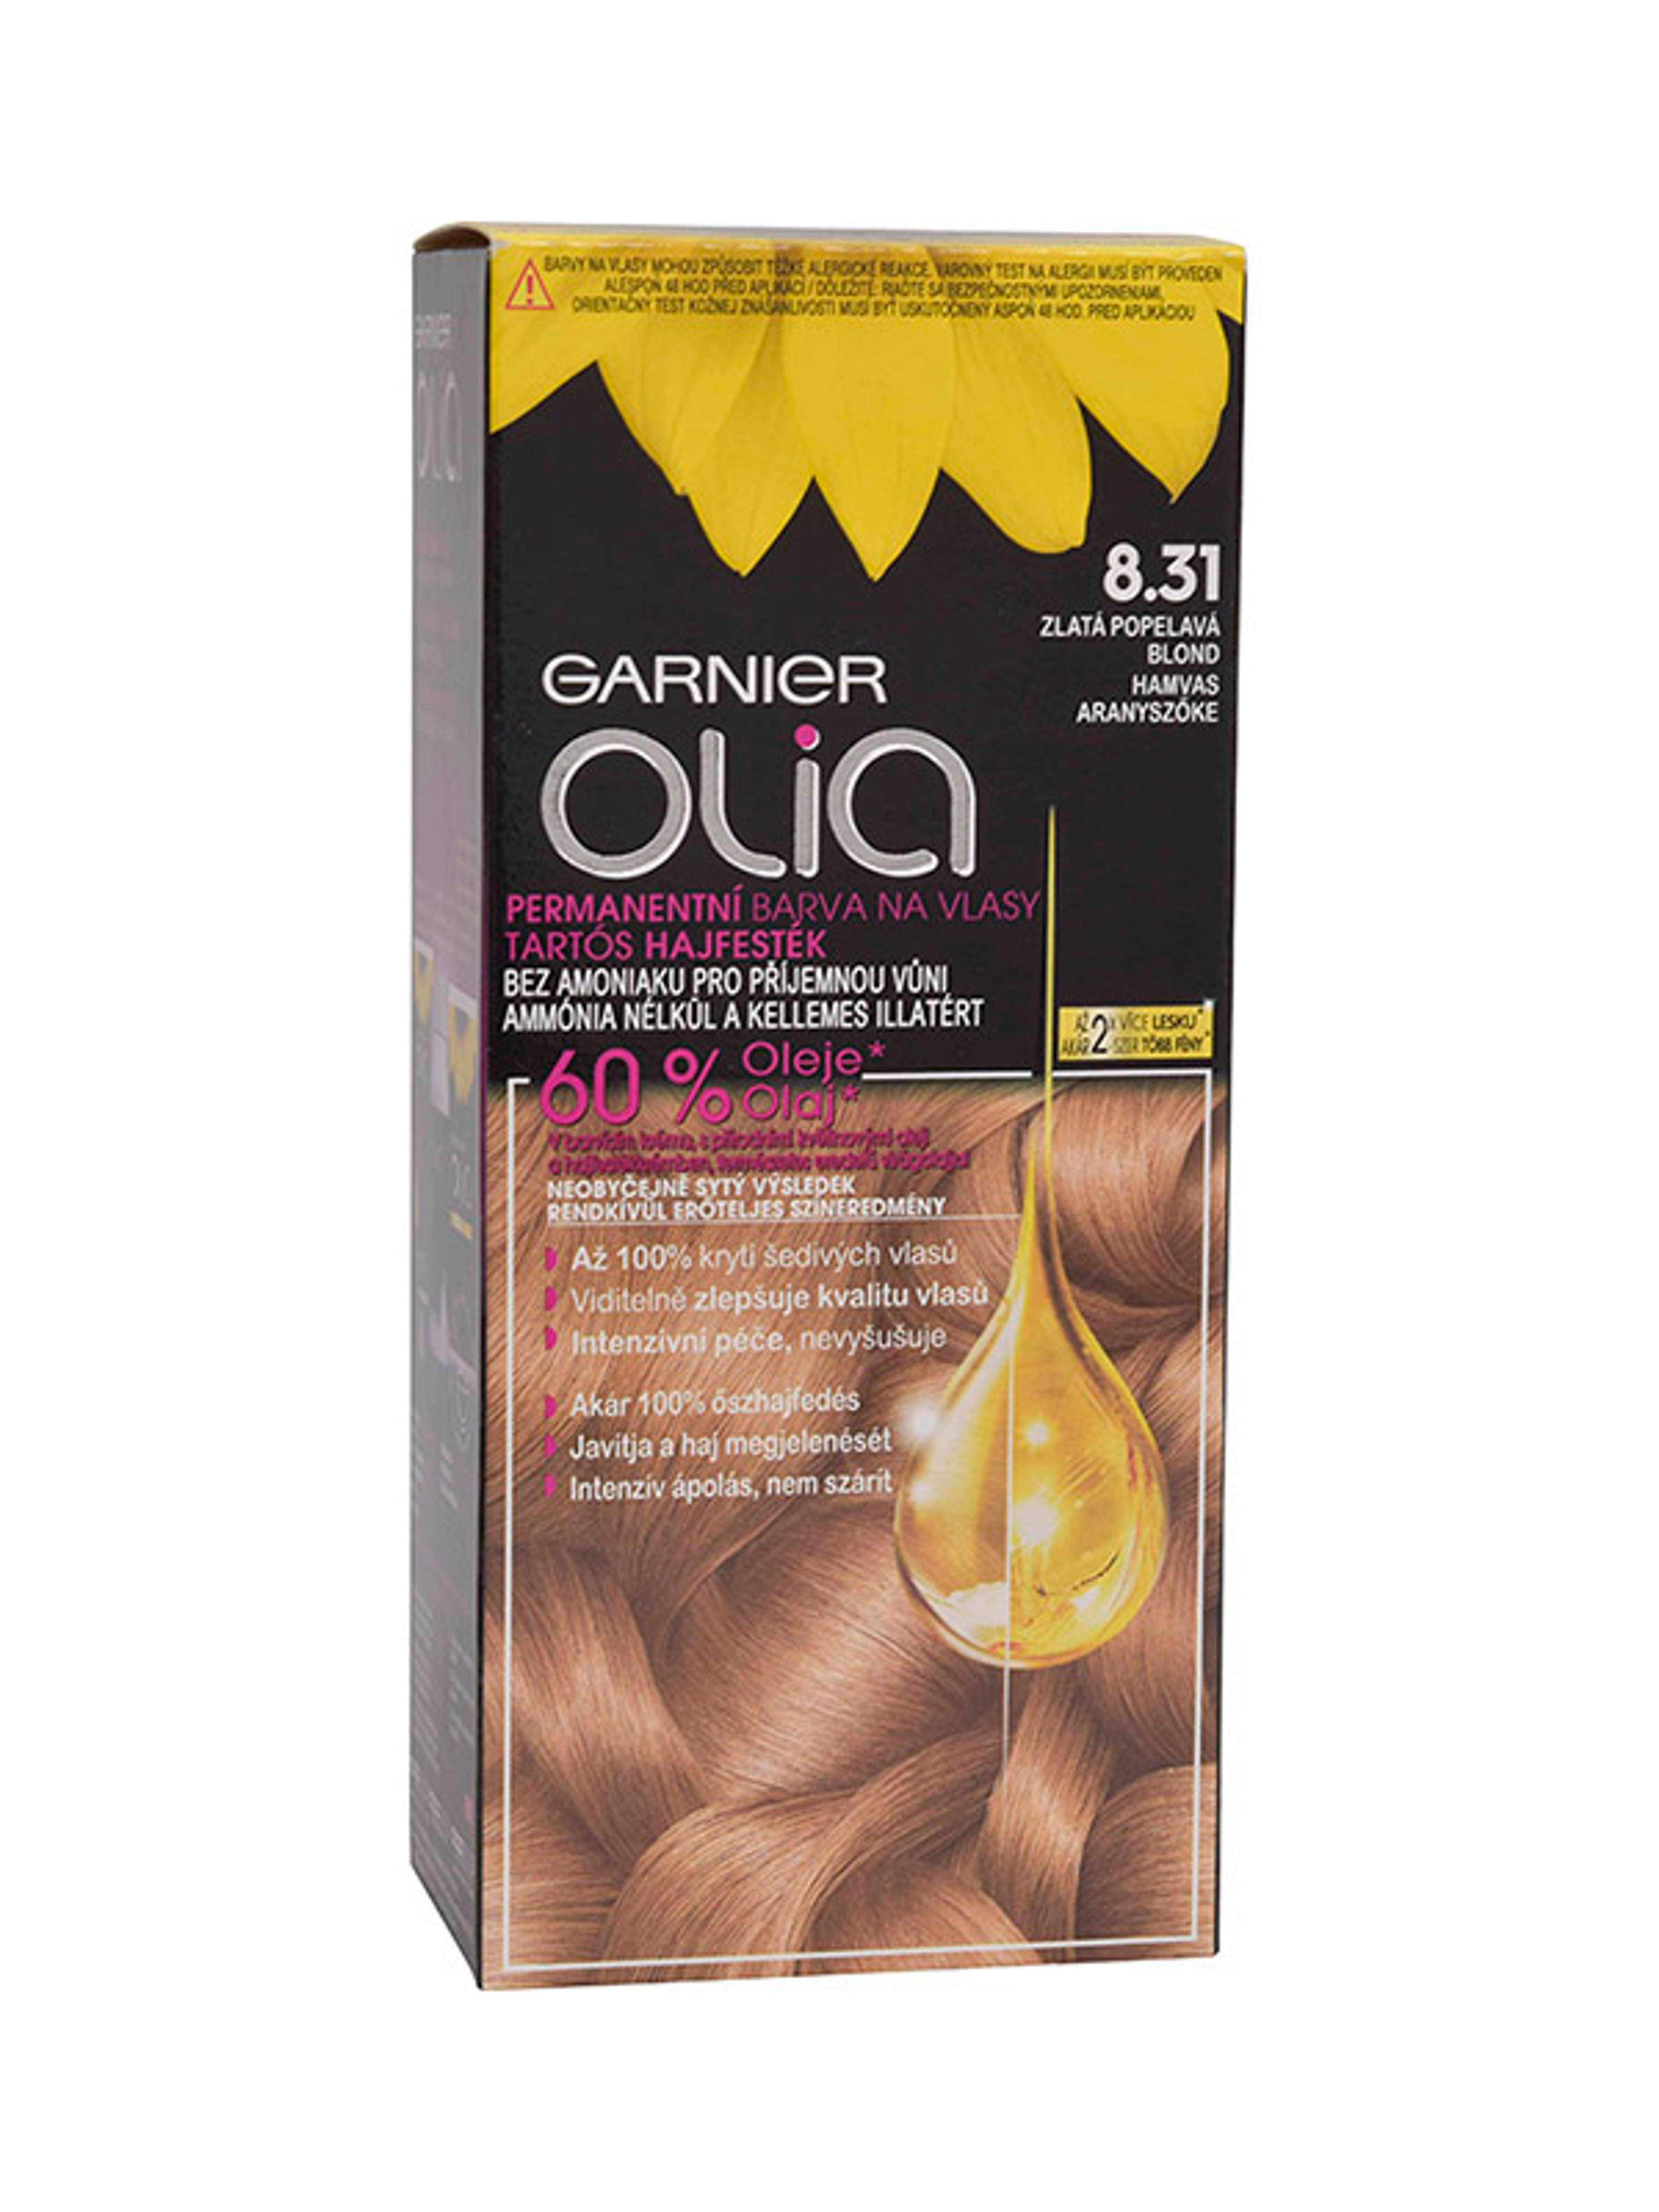 Garnier Olia tartós hajfesték 8.31 Hamvas aranyszőke - 1 db-3